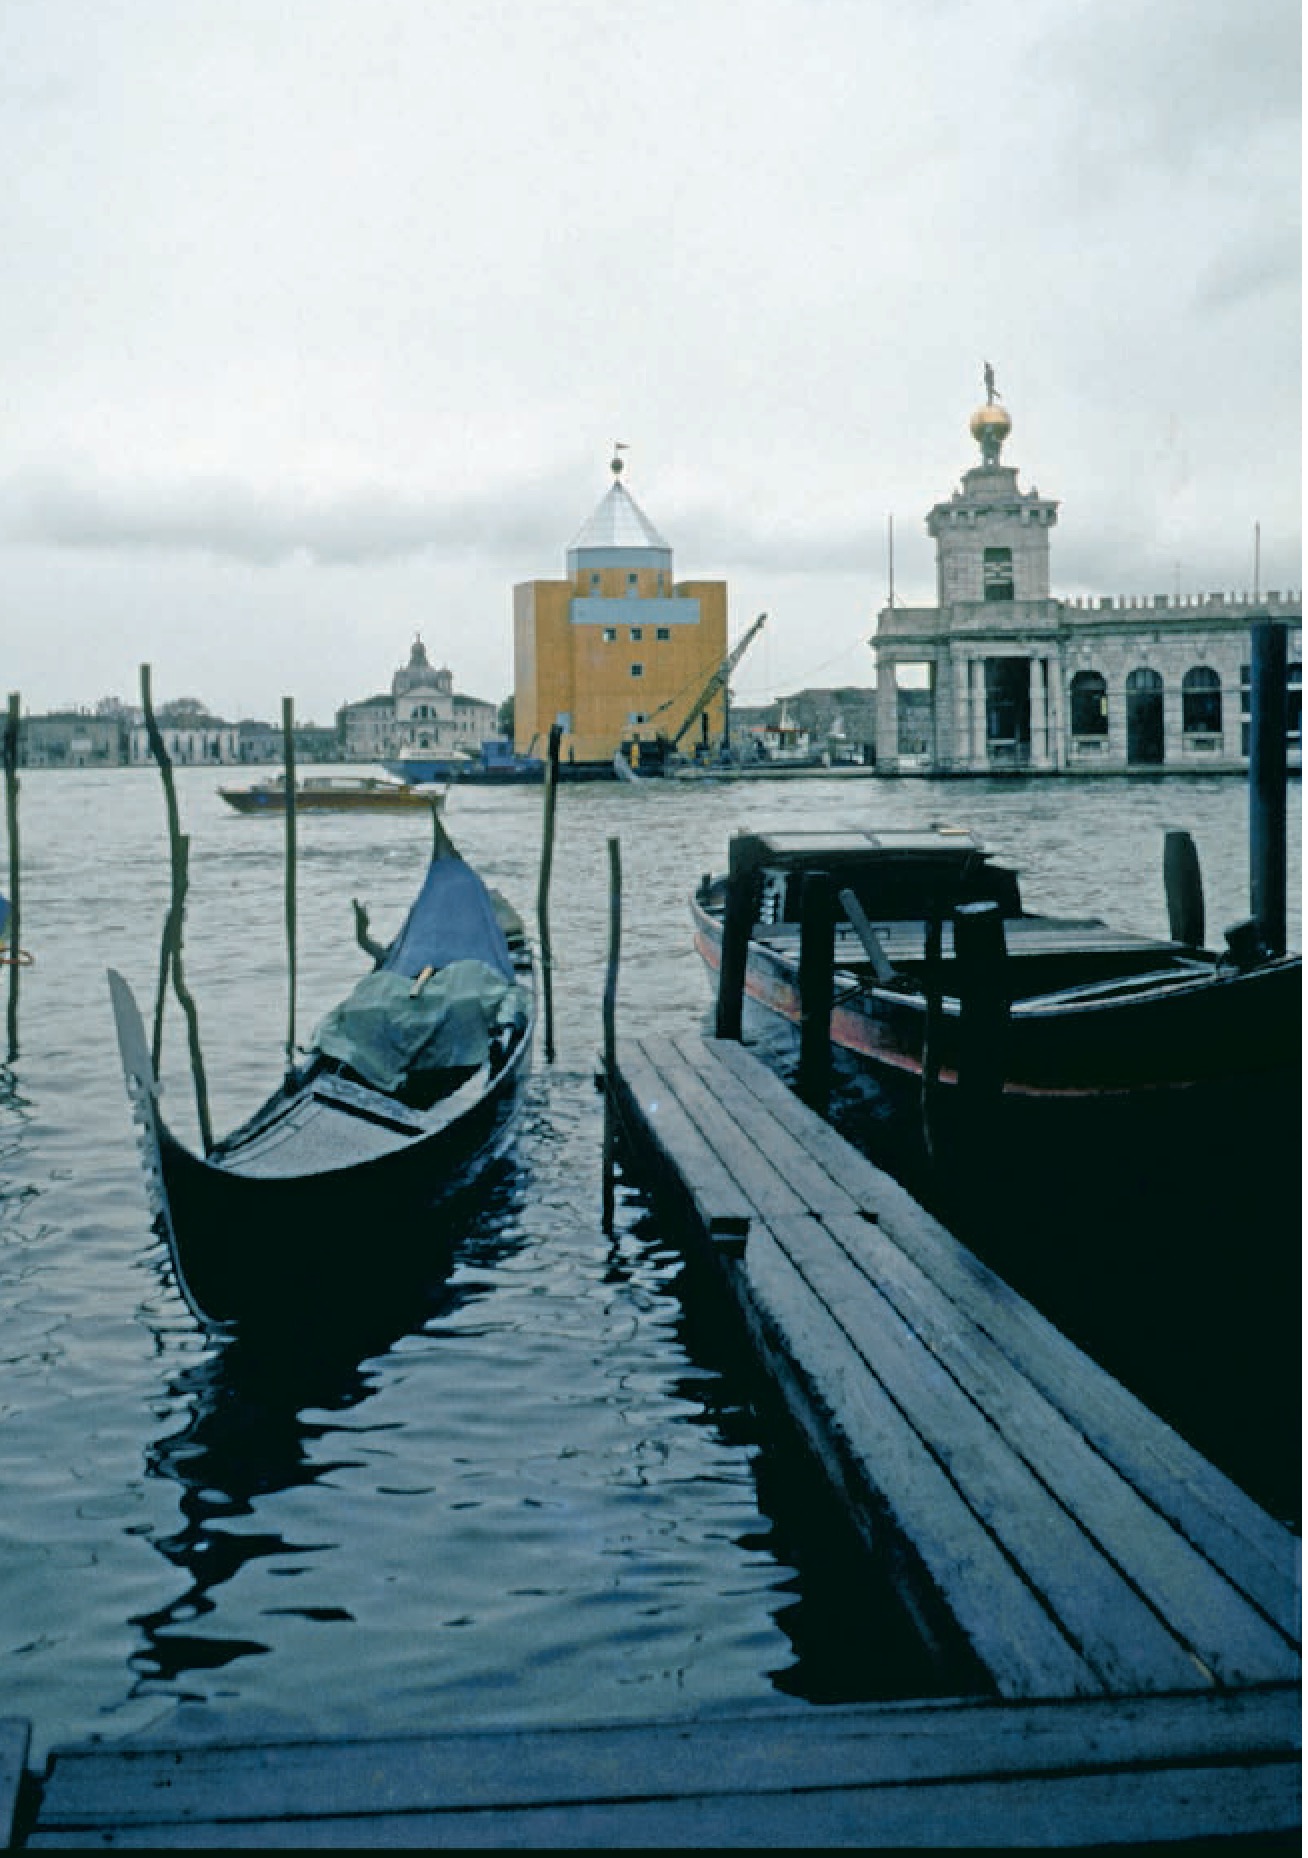 Aldo Rossi’s Teatro del Mondo (Theater of the World)
anchored at the Punta della Dogana during the 1980 Venice Architecture Biennale from Exhibit A Exhibitions That Transformed Architecture 1948-2000